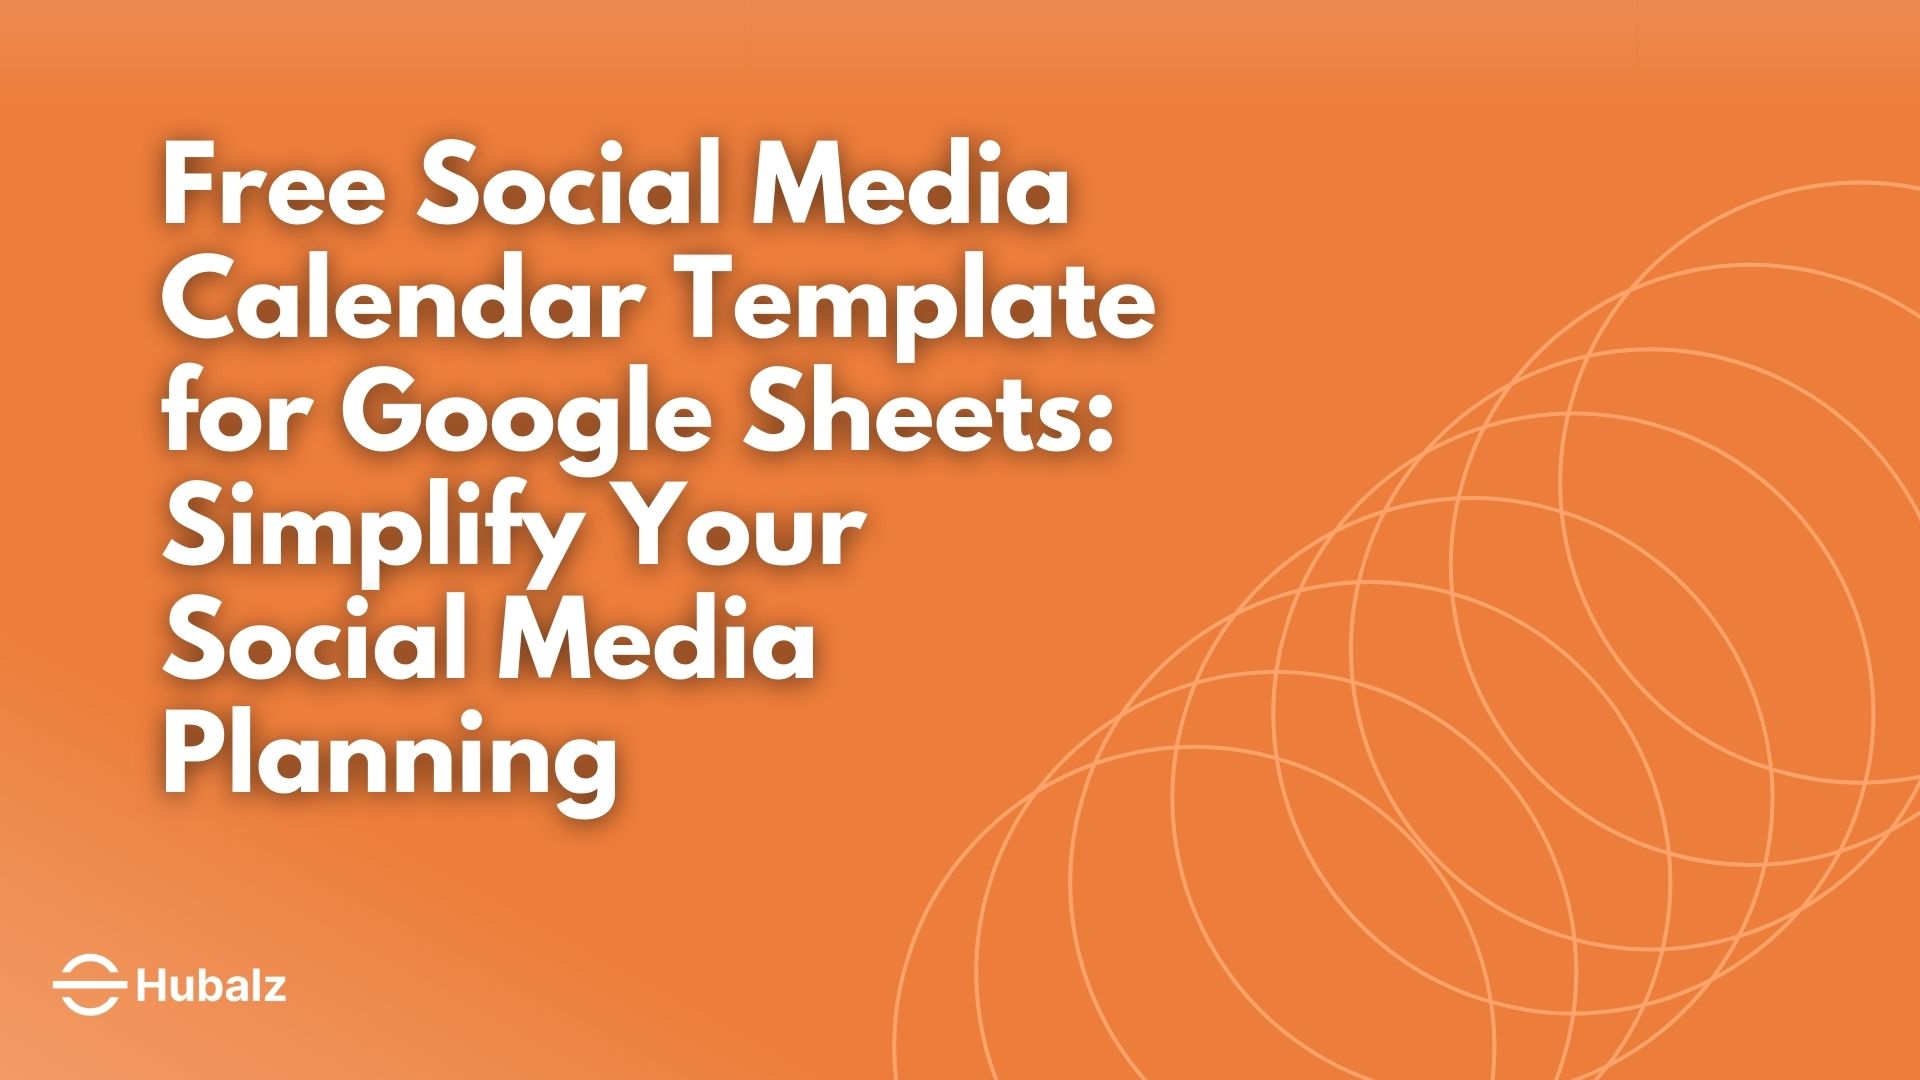 Free Social Media Calendar Template for Google Sheets: Simplify Your Social Media Planning